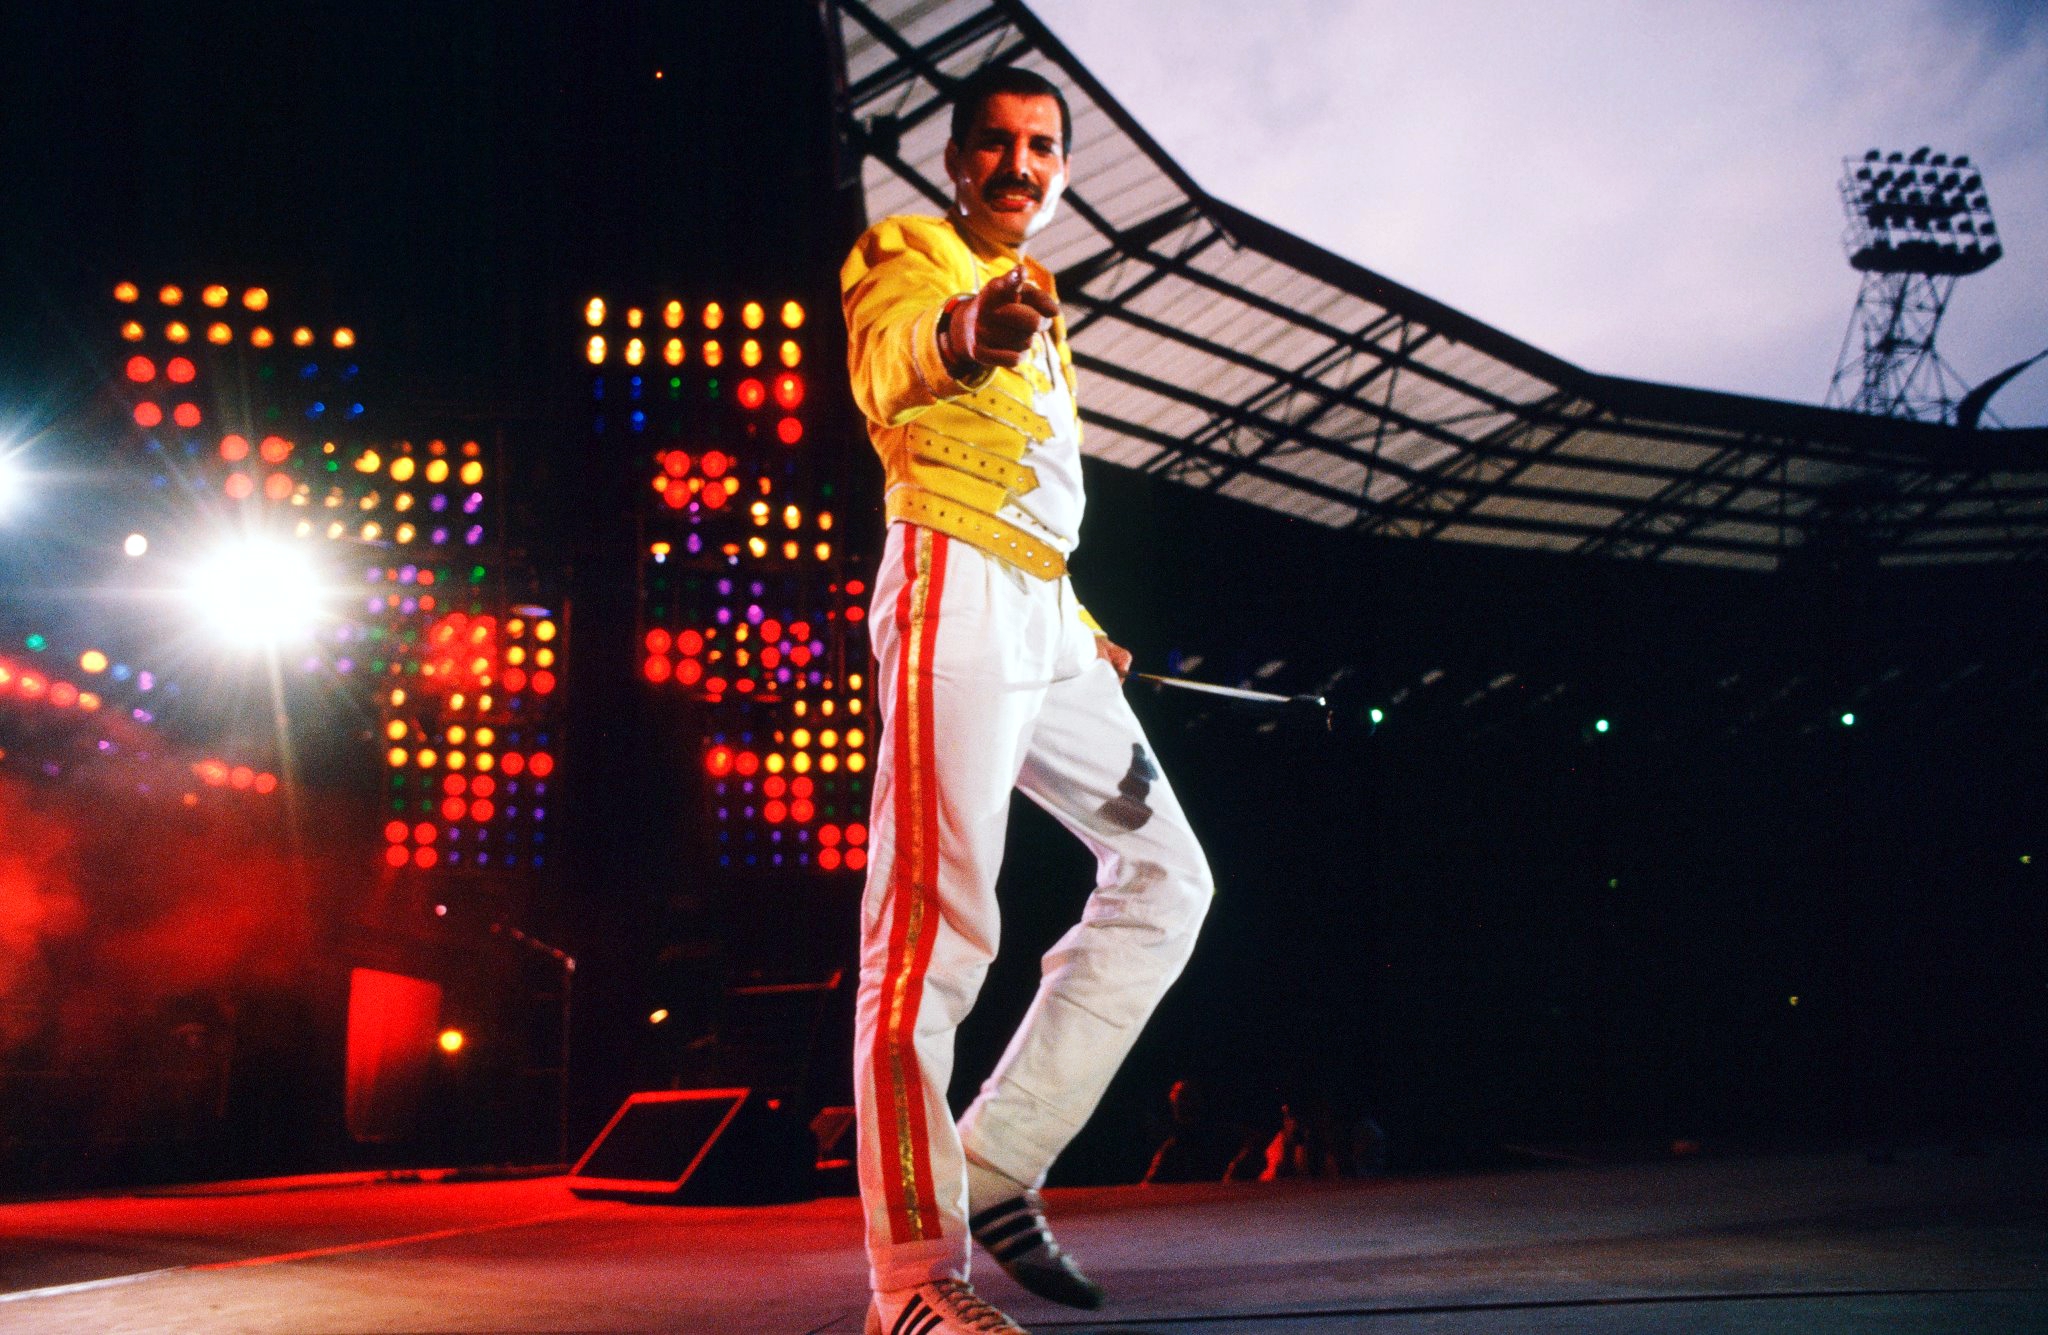 Фредди стадион уэмбли. Freddie Mercury. Фредди Меркьюри Уэмбли. Queen Уэмбли 1986. Группа Квин Фредди Меркьюри.